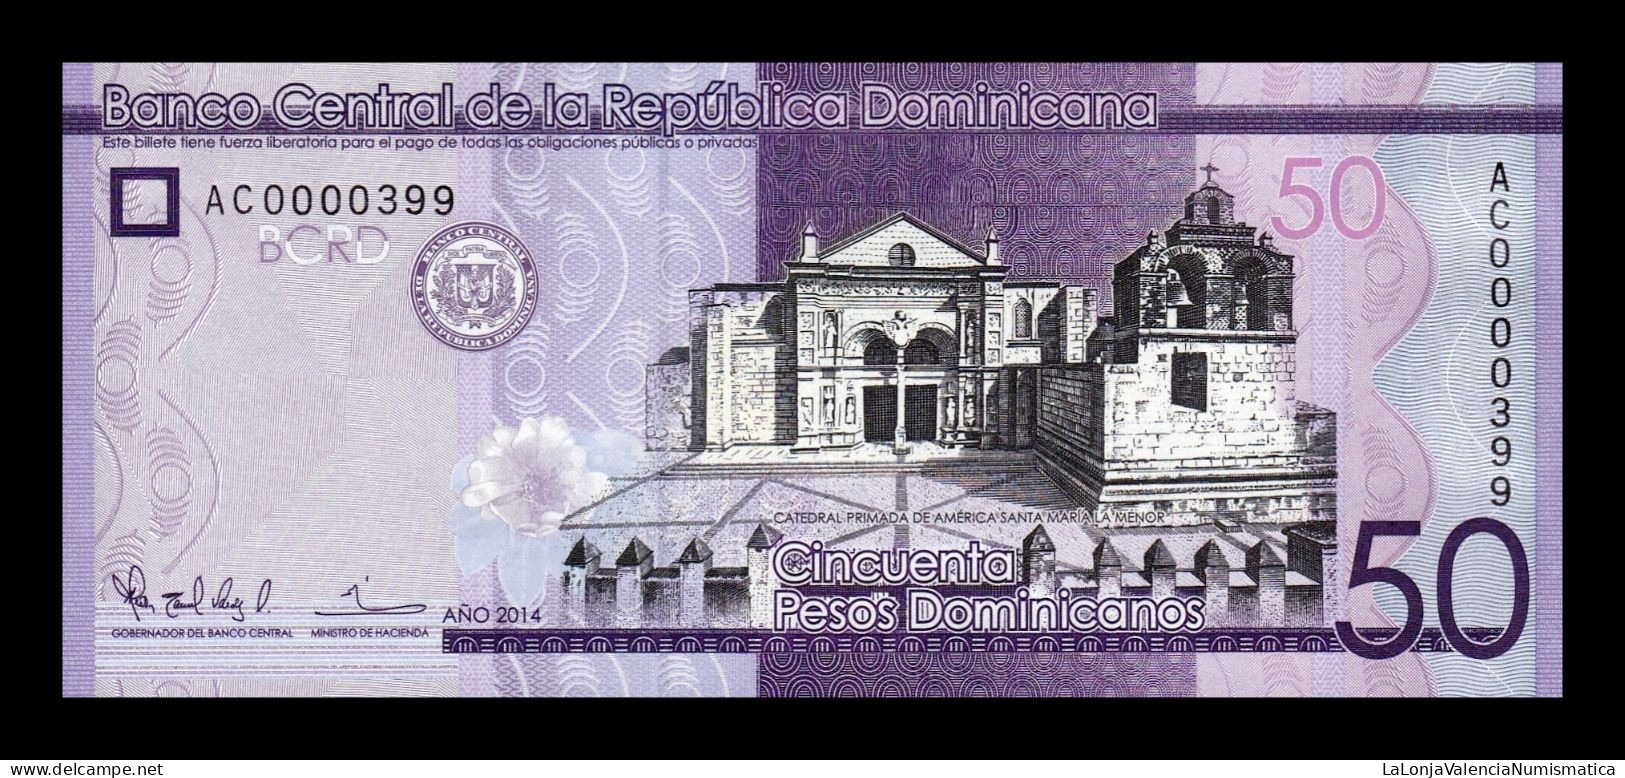 República Dominicana 50 Pesos Dominicanos 2014 Pick 189a Low Serial 399 Sc Unc - República Dominicana